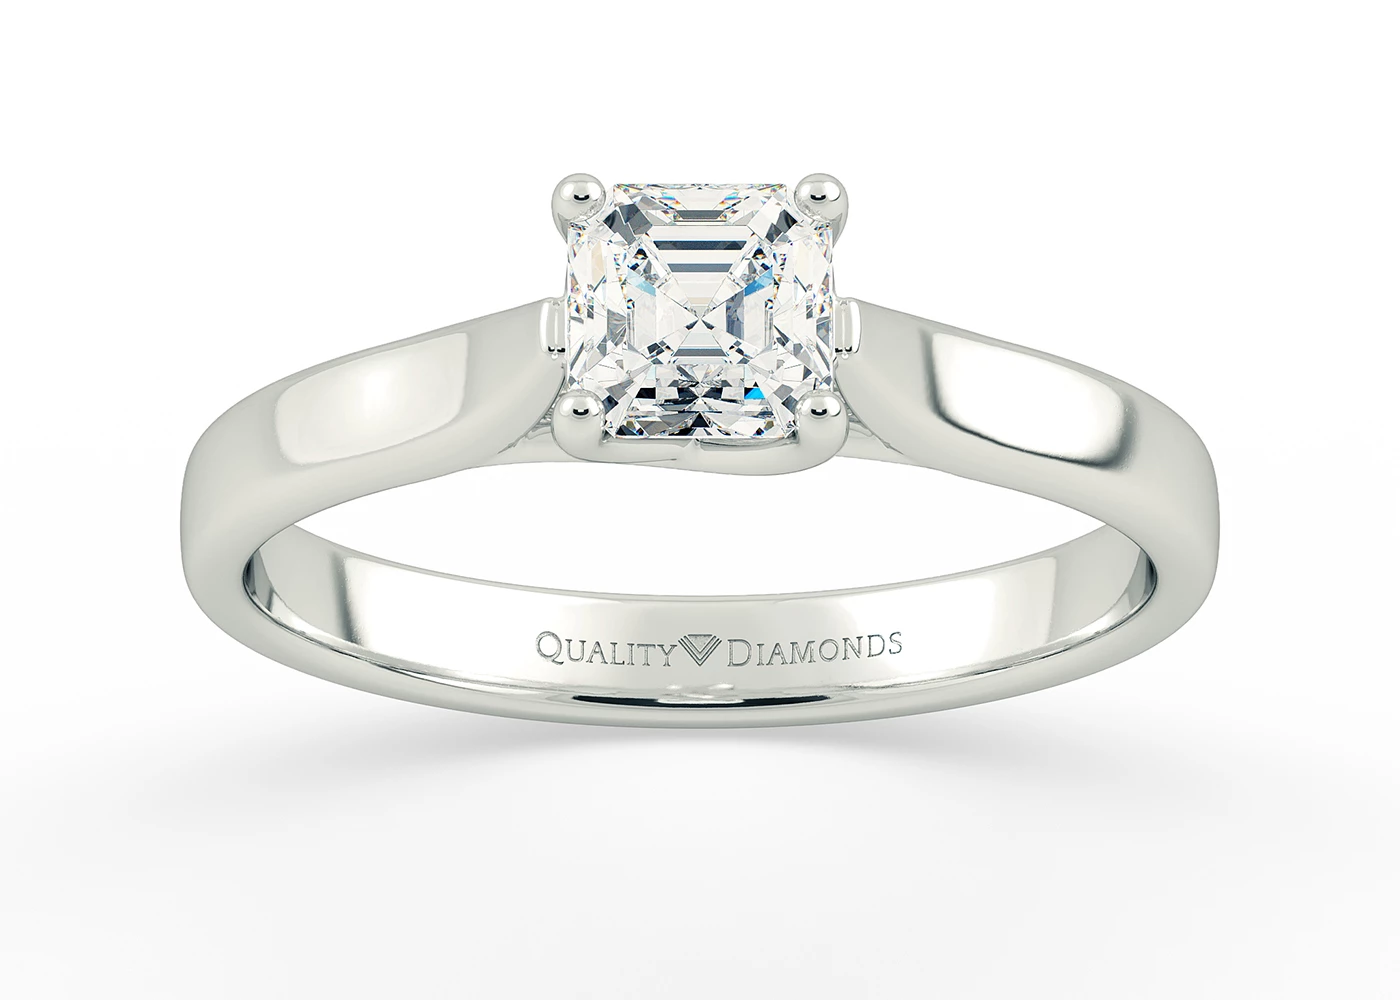 Asscher Mirabelle Diamond Ring in Platinum